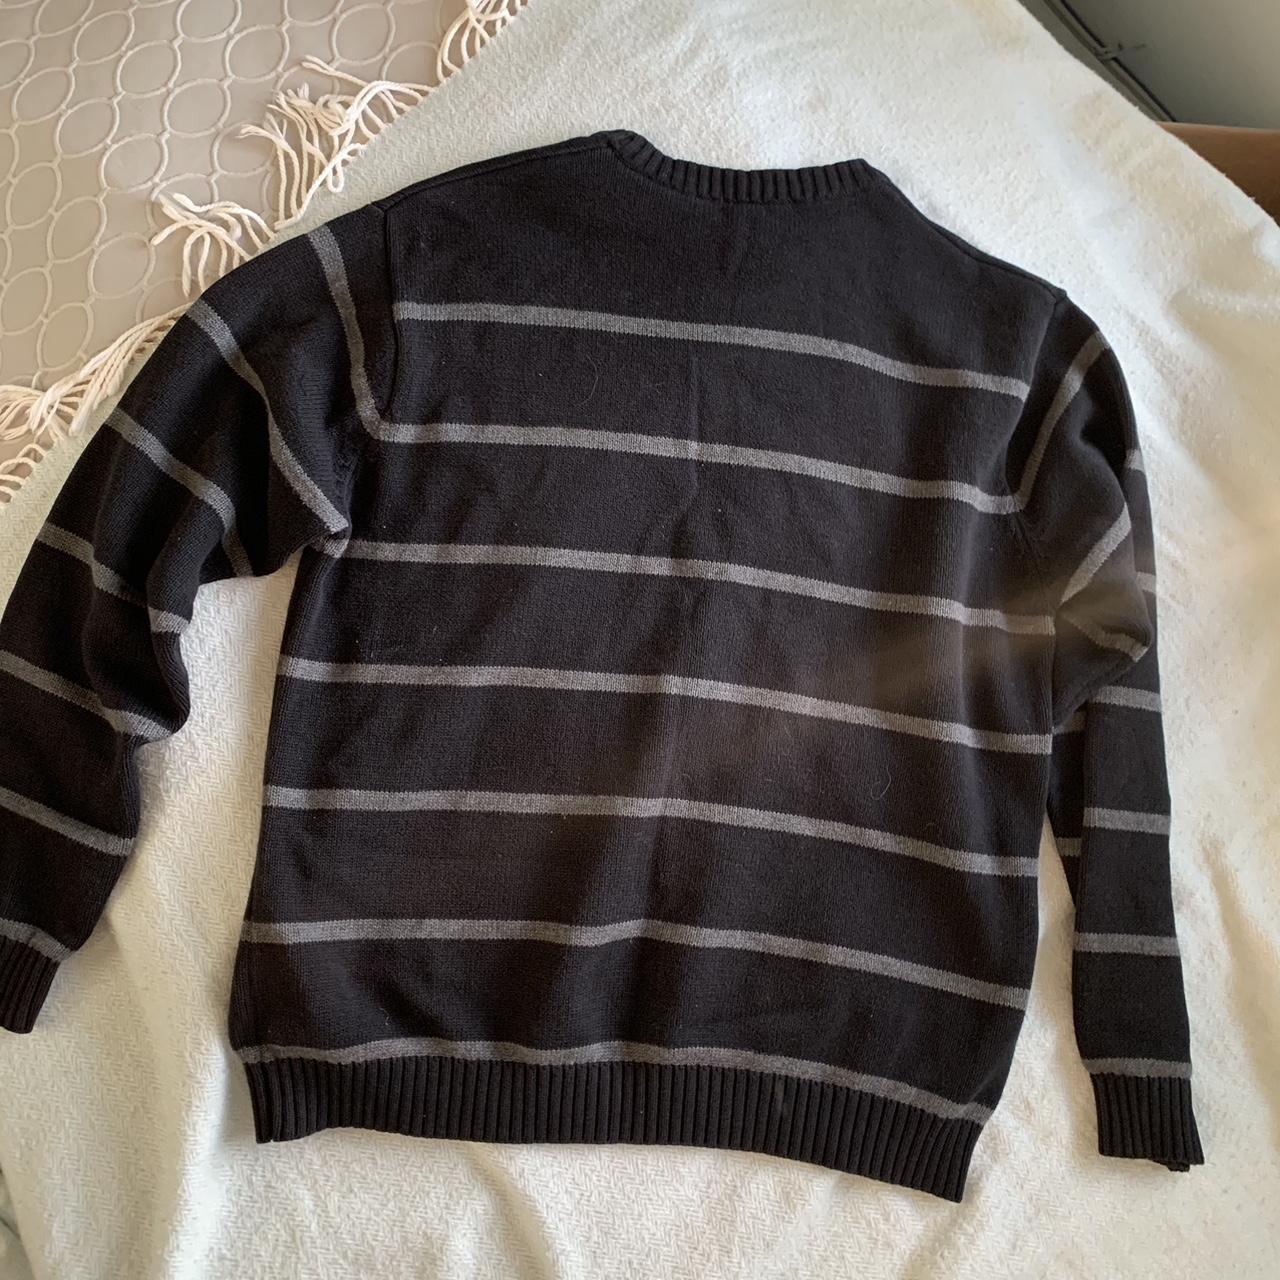 Stripped black and gray Gap Sweatshirt - Depop